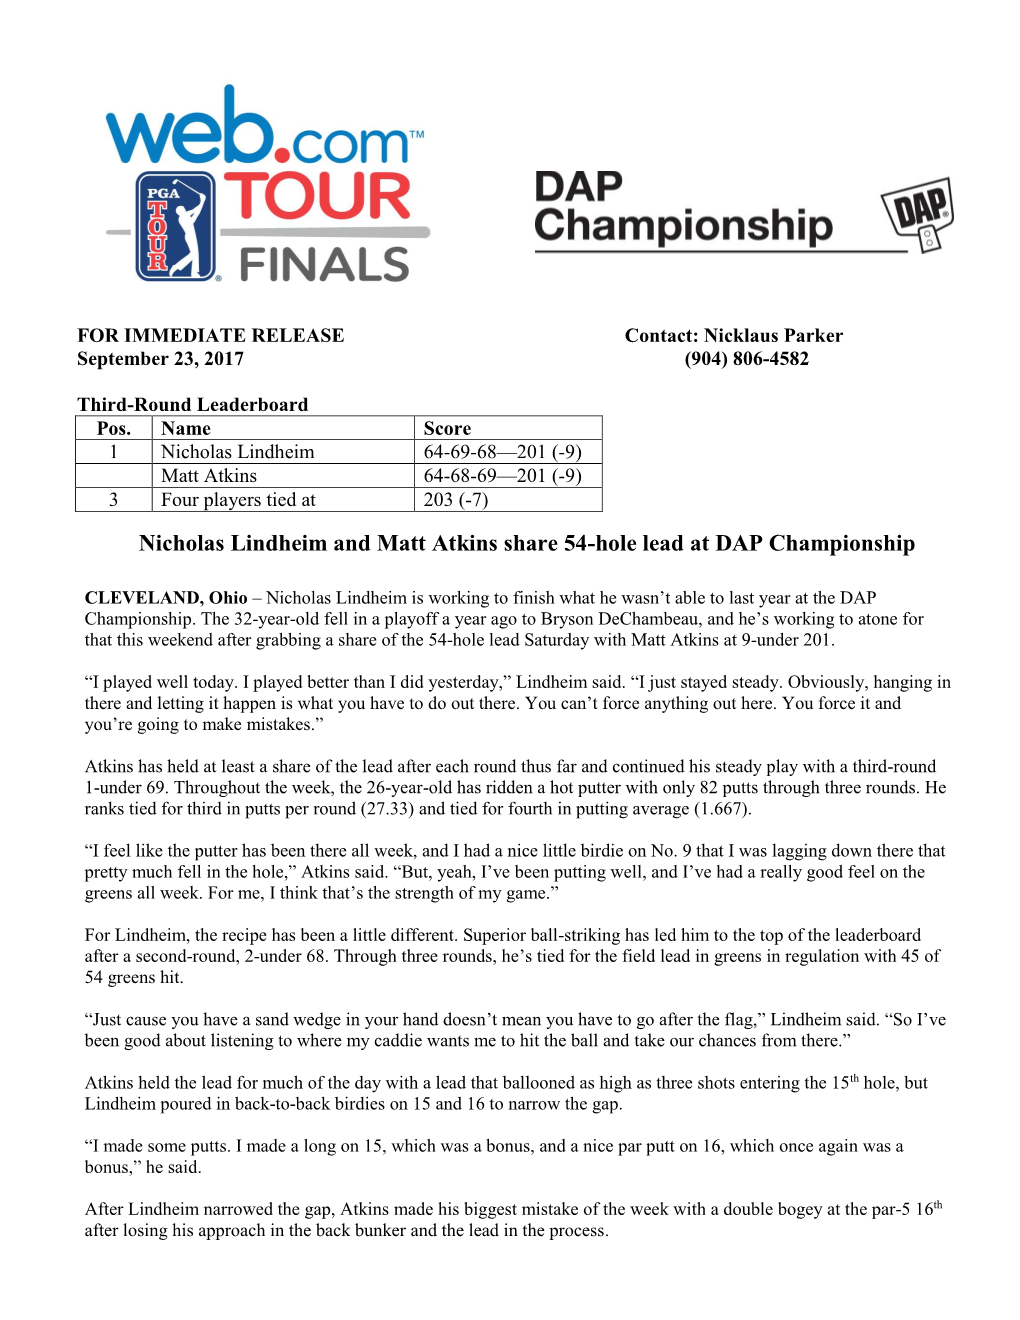 Nicholas Lindheim and Matt Atkins Share 54-Hole Lead at DAP Championship